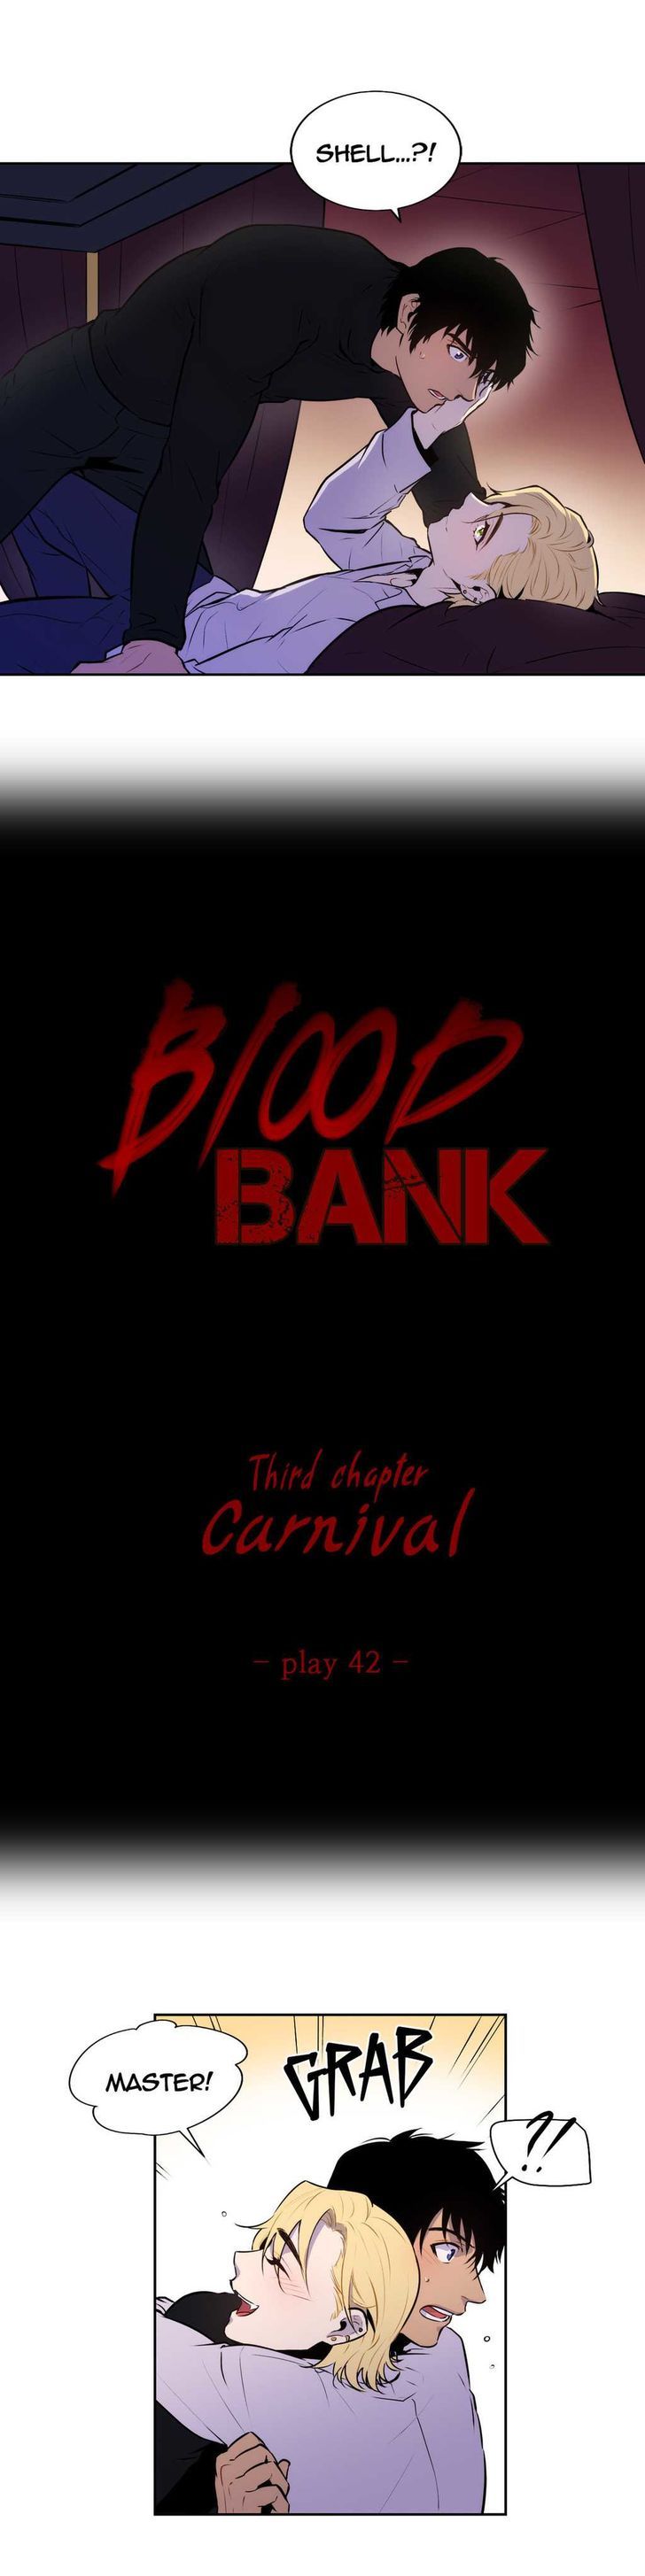 Blood Bank 42